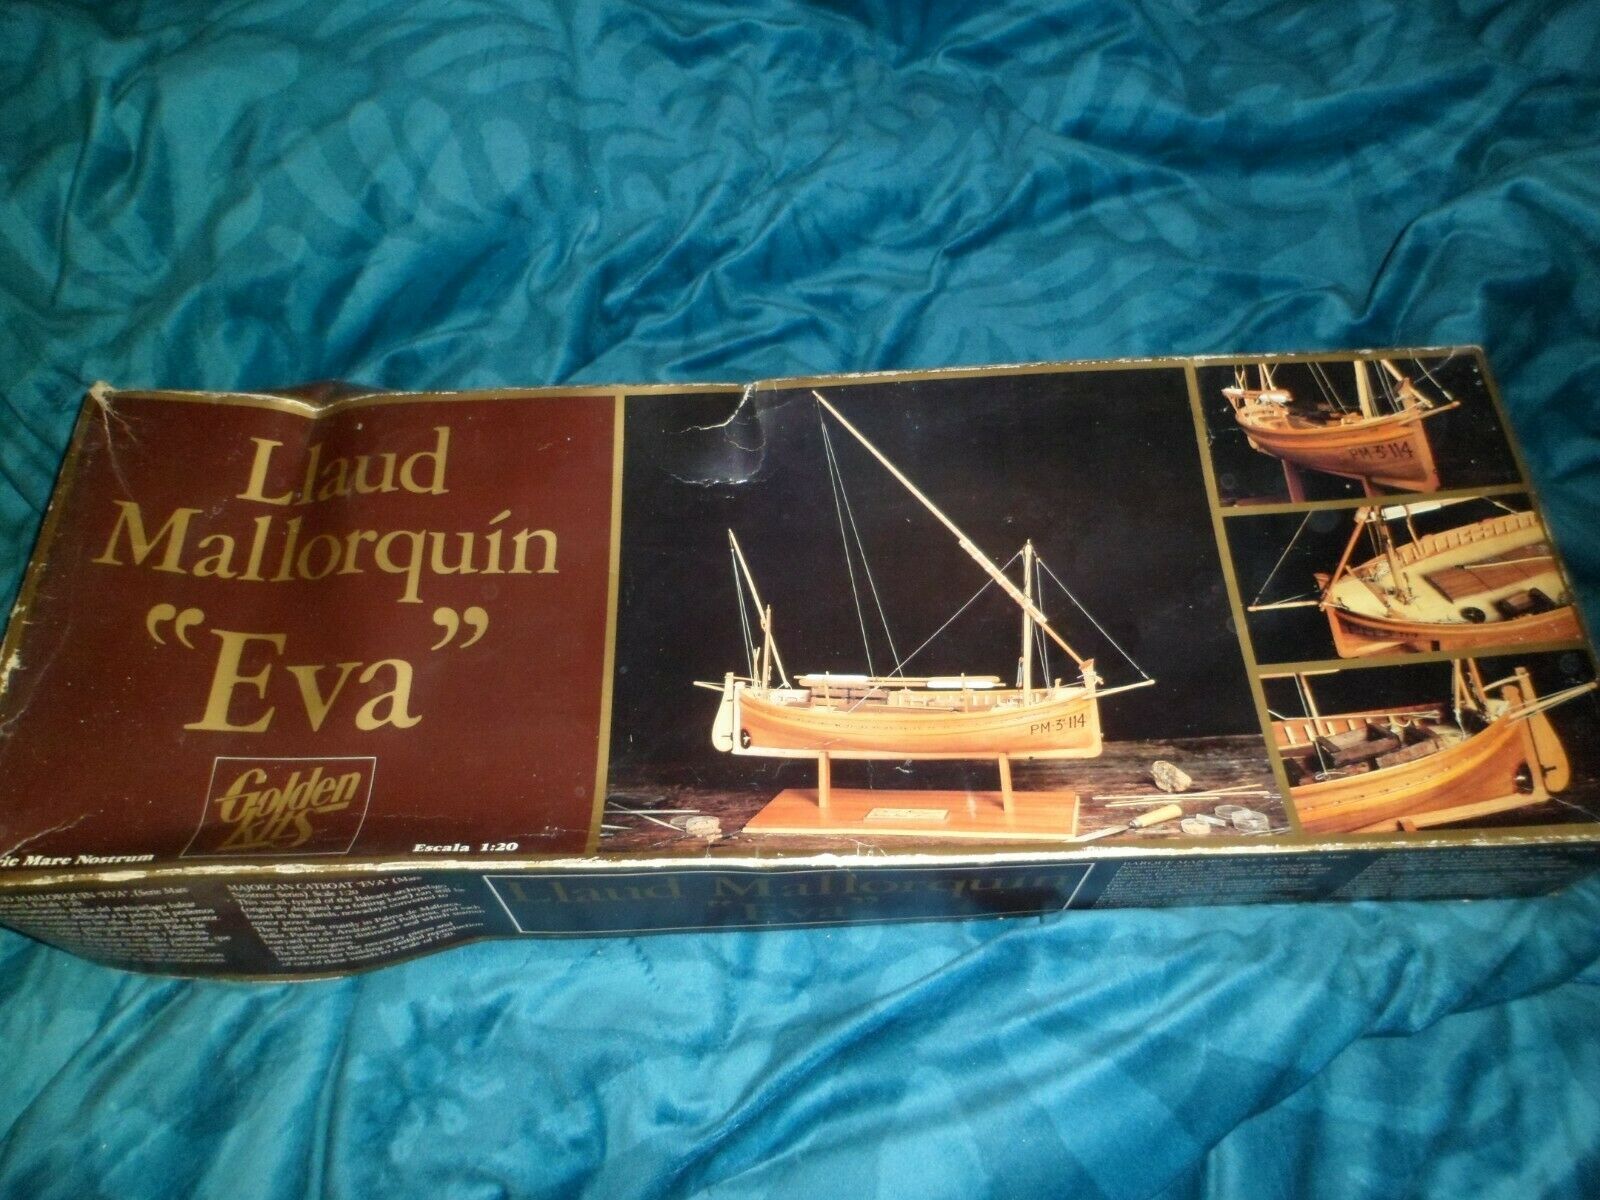 Very Rare Old Golden Kits Llaud Mallorquin "eva" Ship Boat Model Kit 1/20